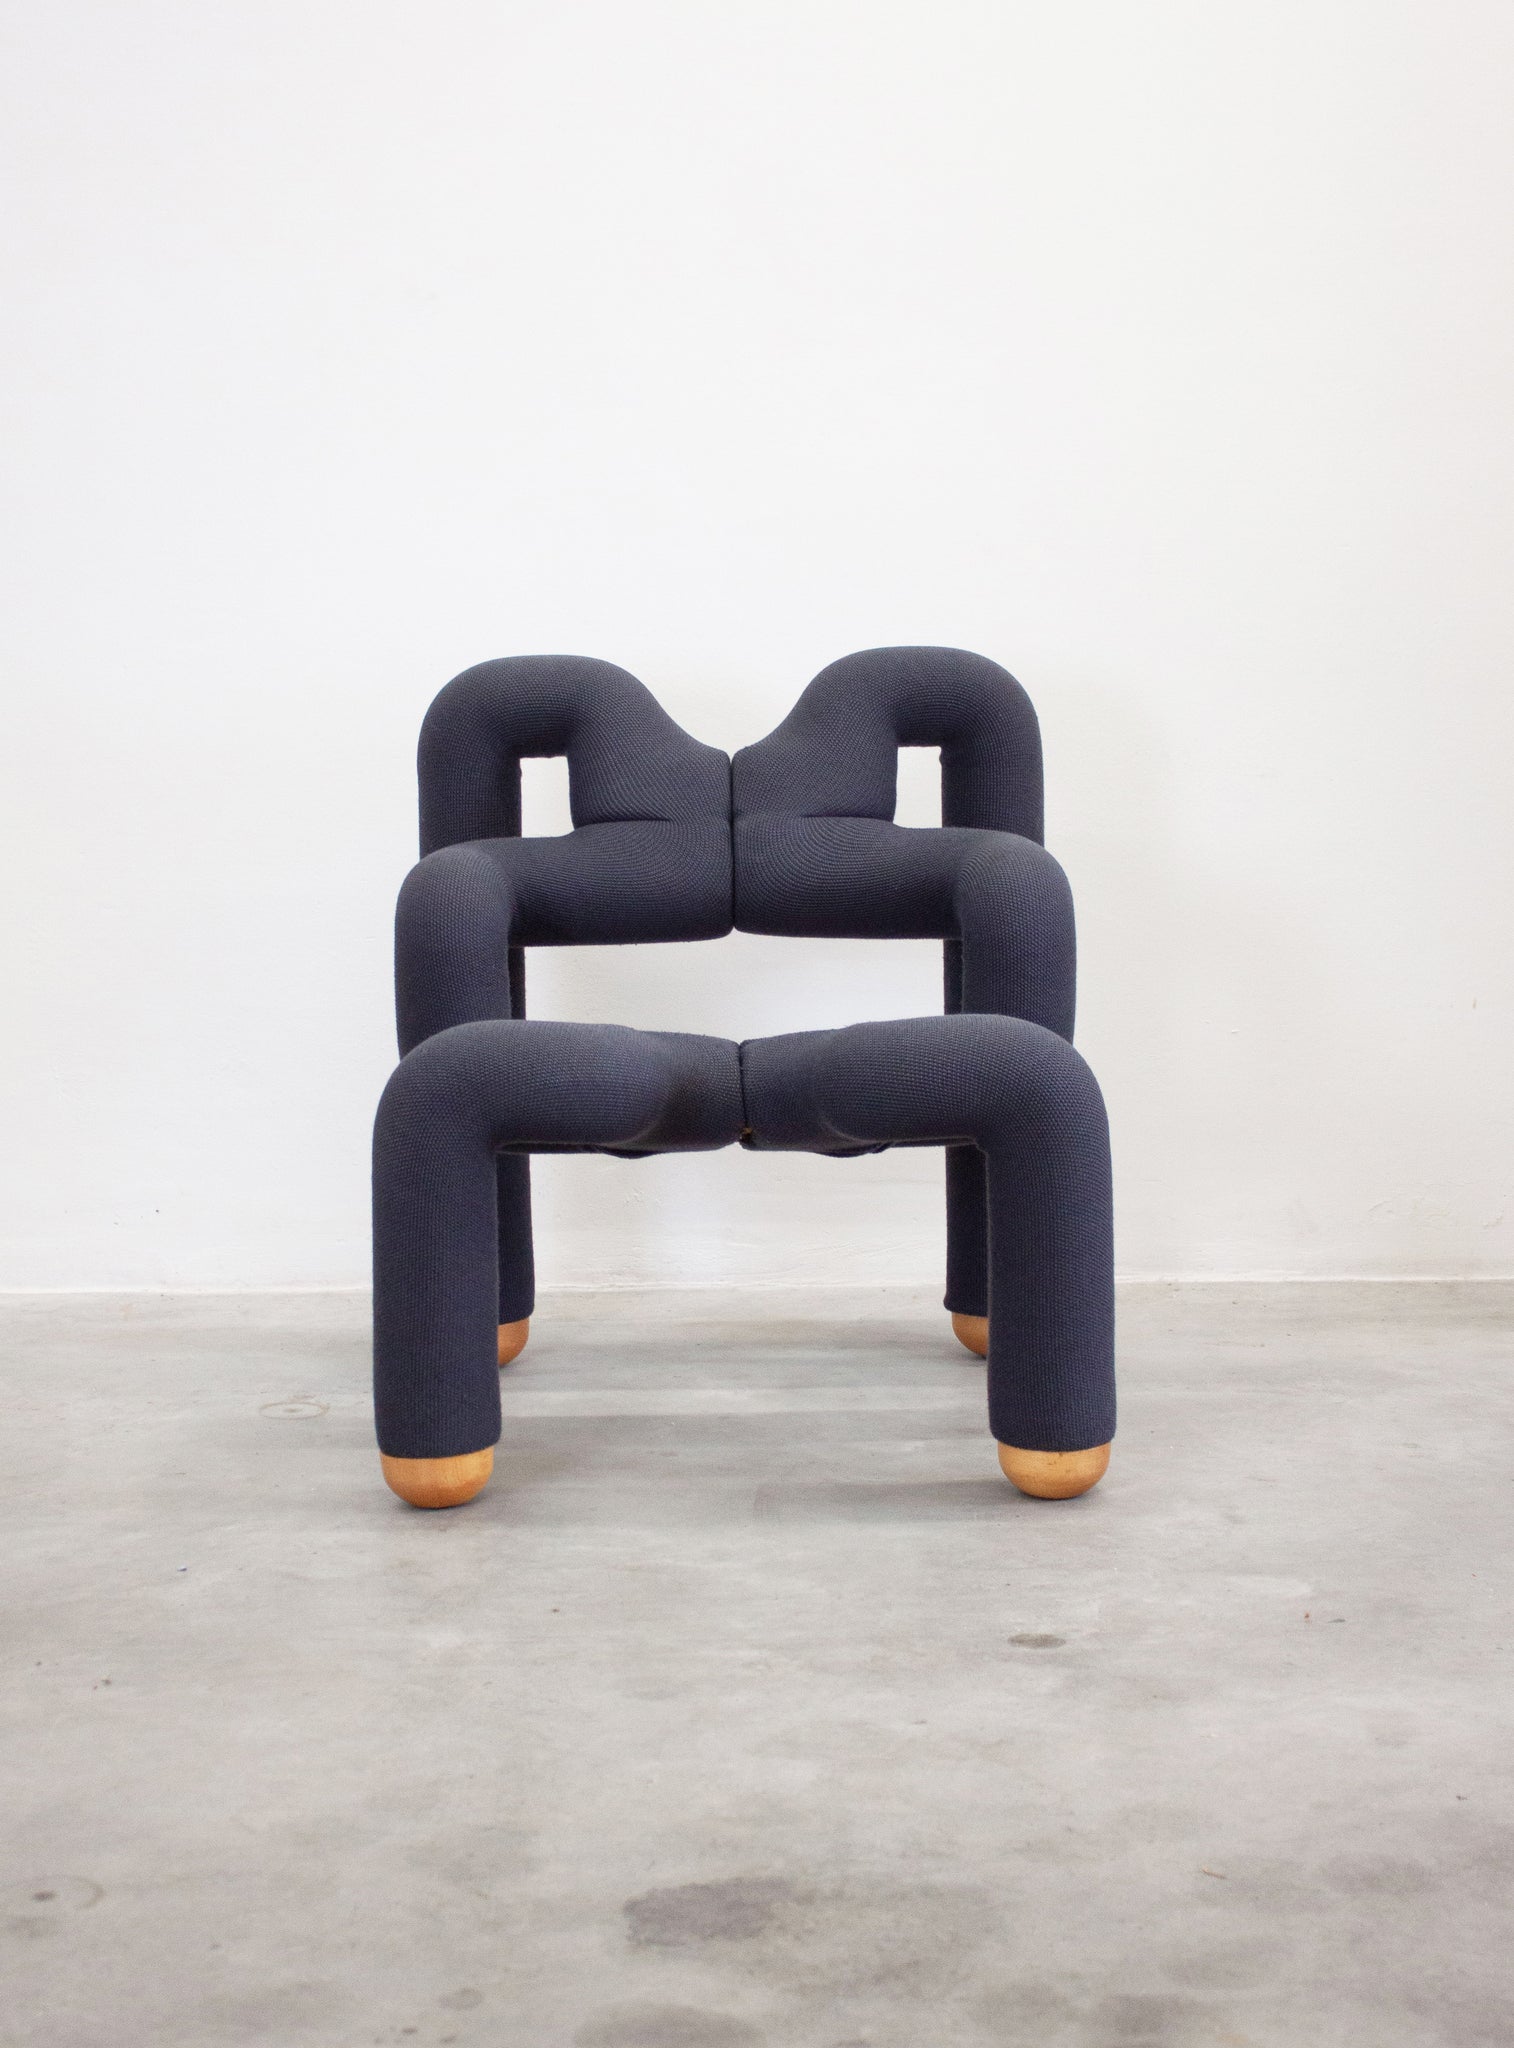 Varier Ekstrem Lounge Chair by Terje Ekstrøm (Dark Blue Grey)